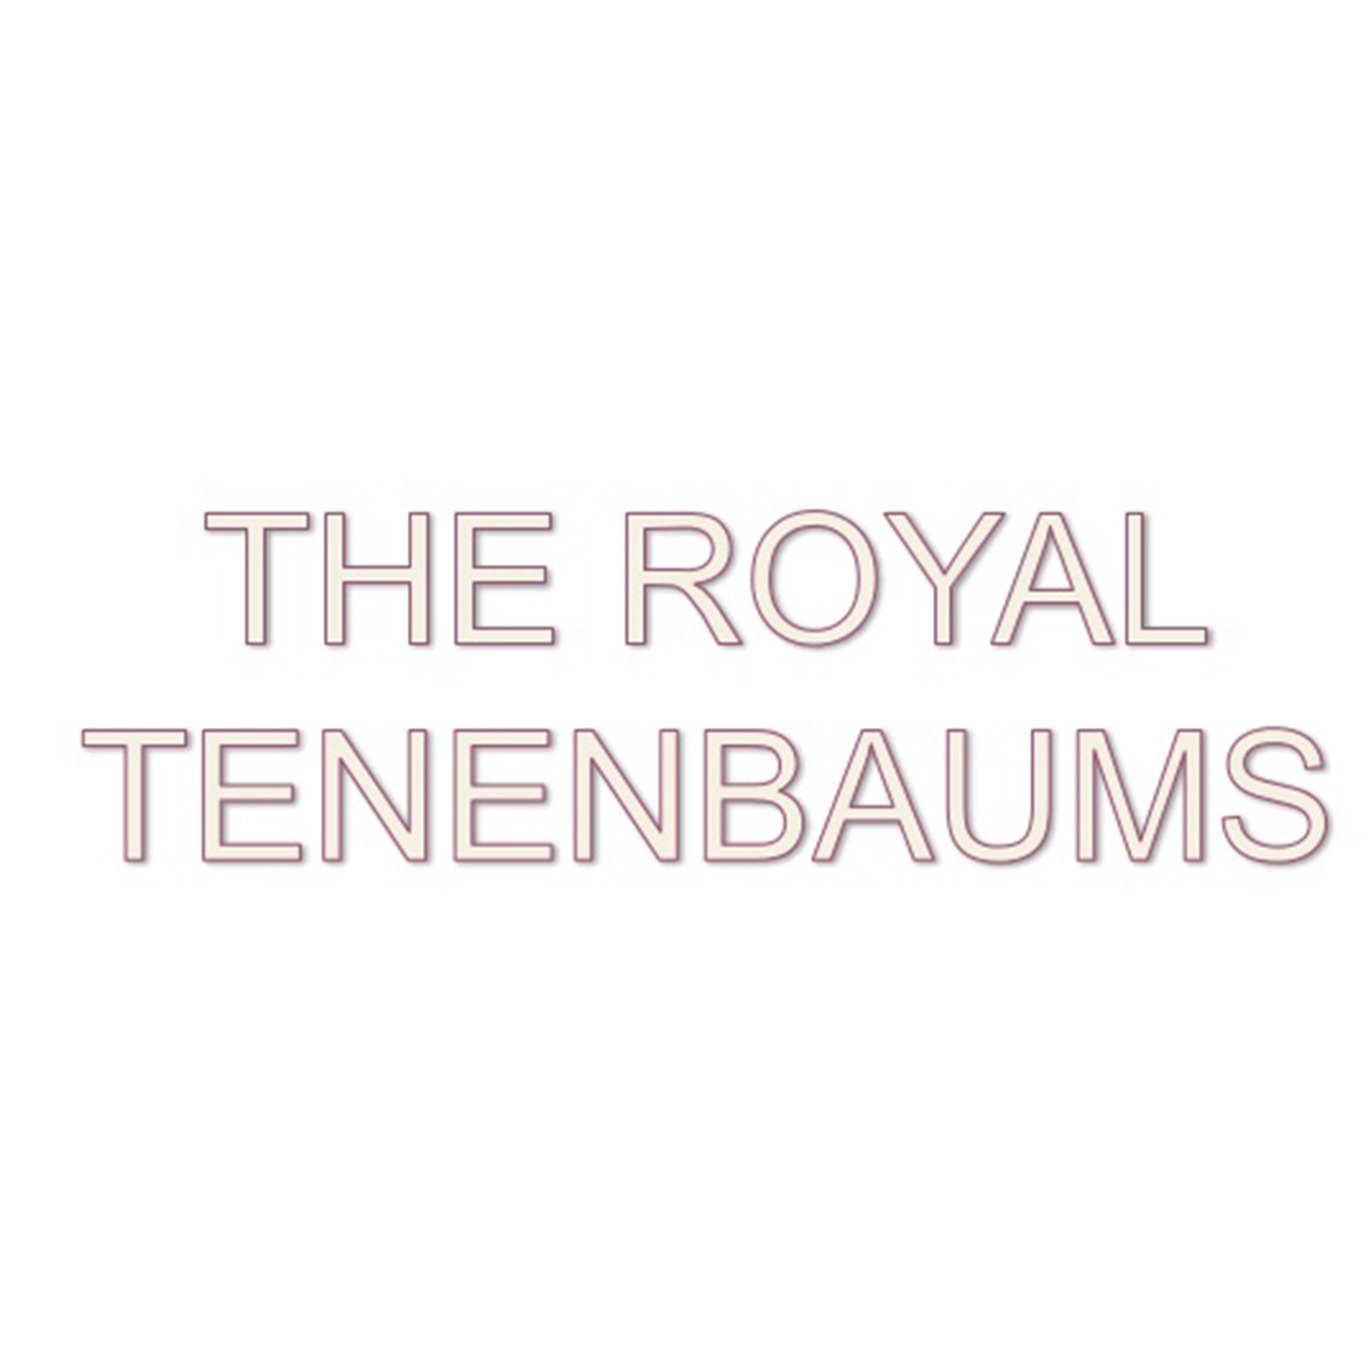 The Royal Tenebaums